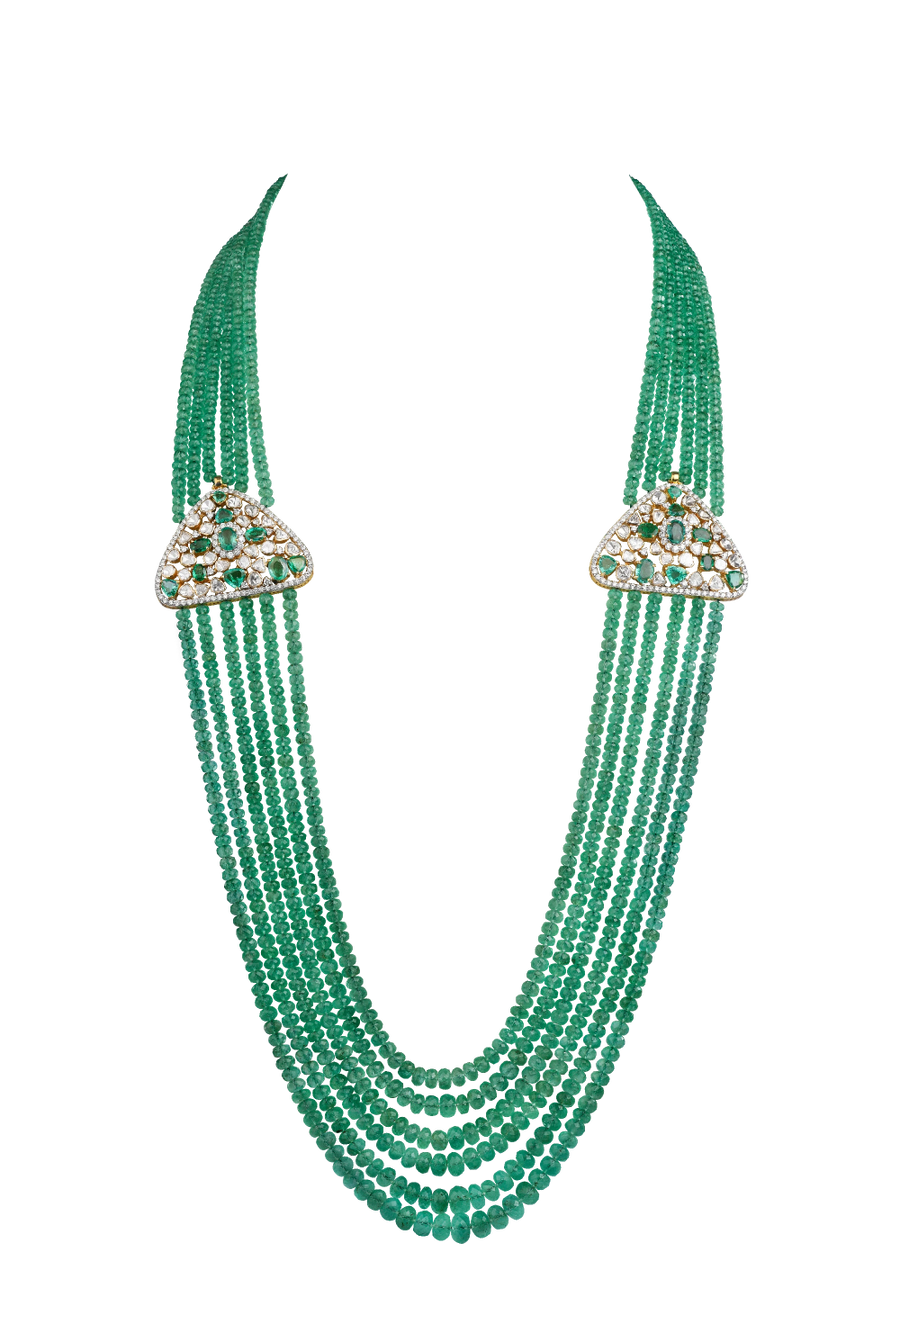 Columbian Emerald beads